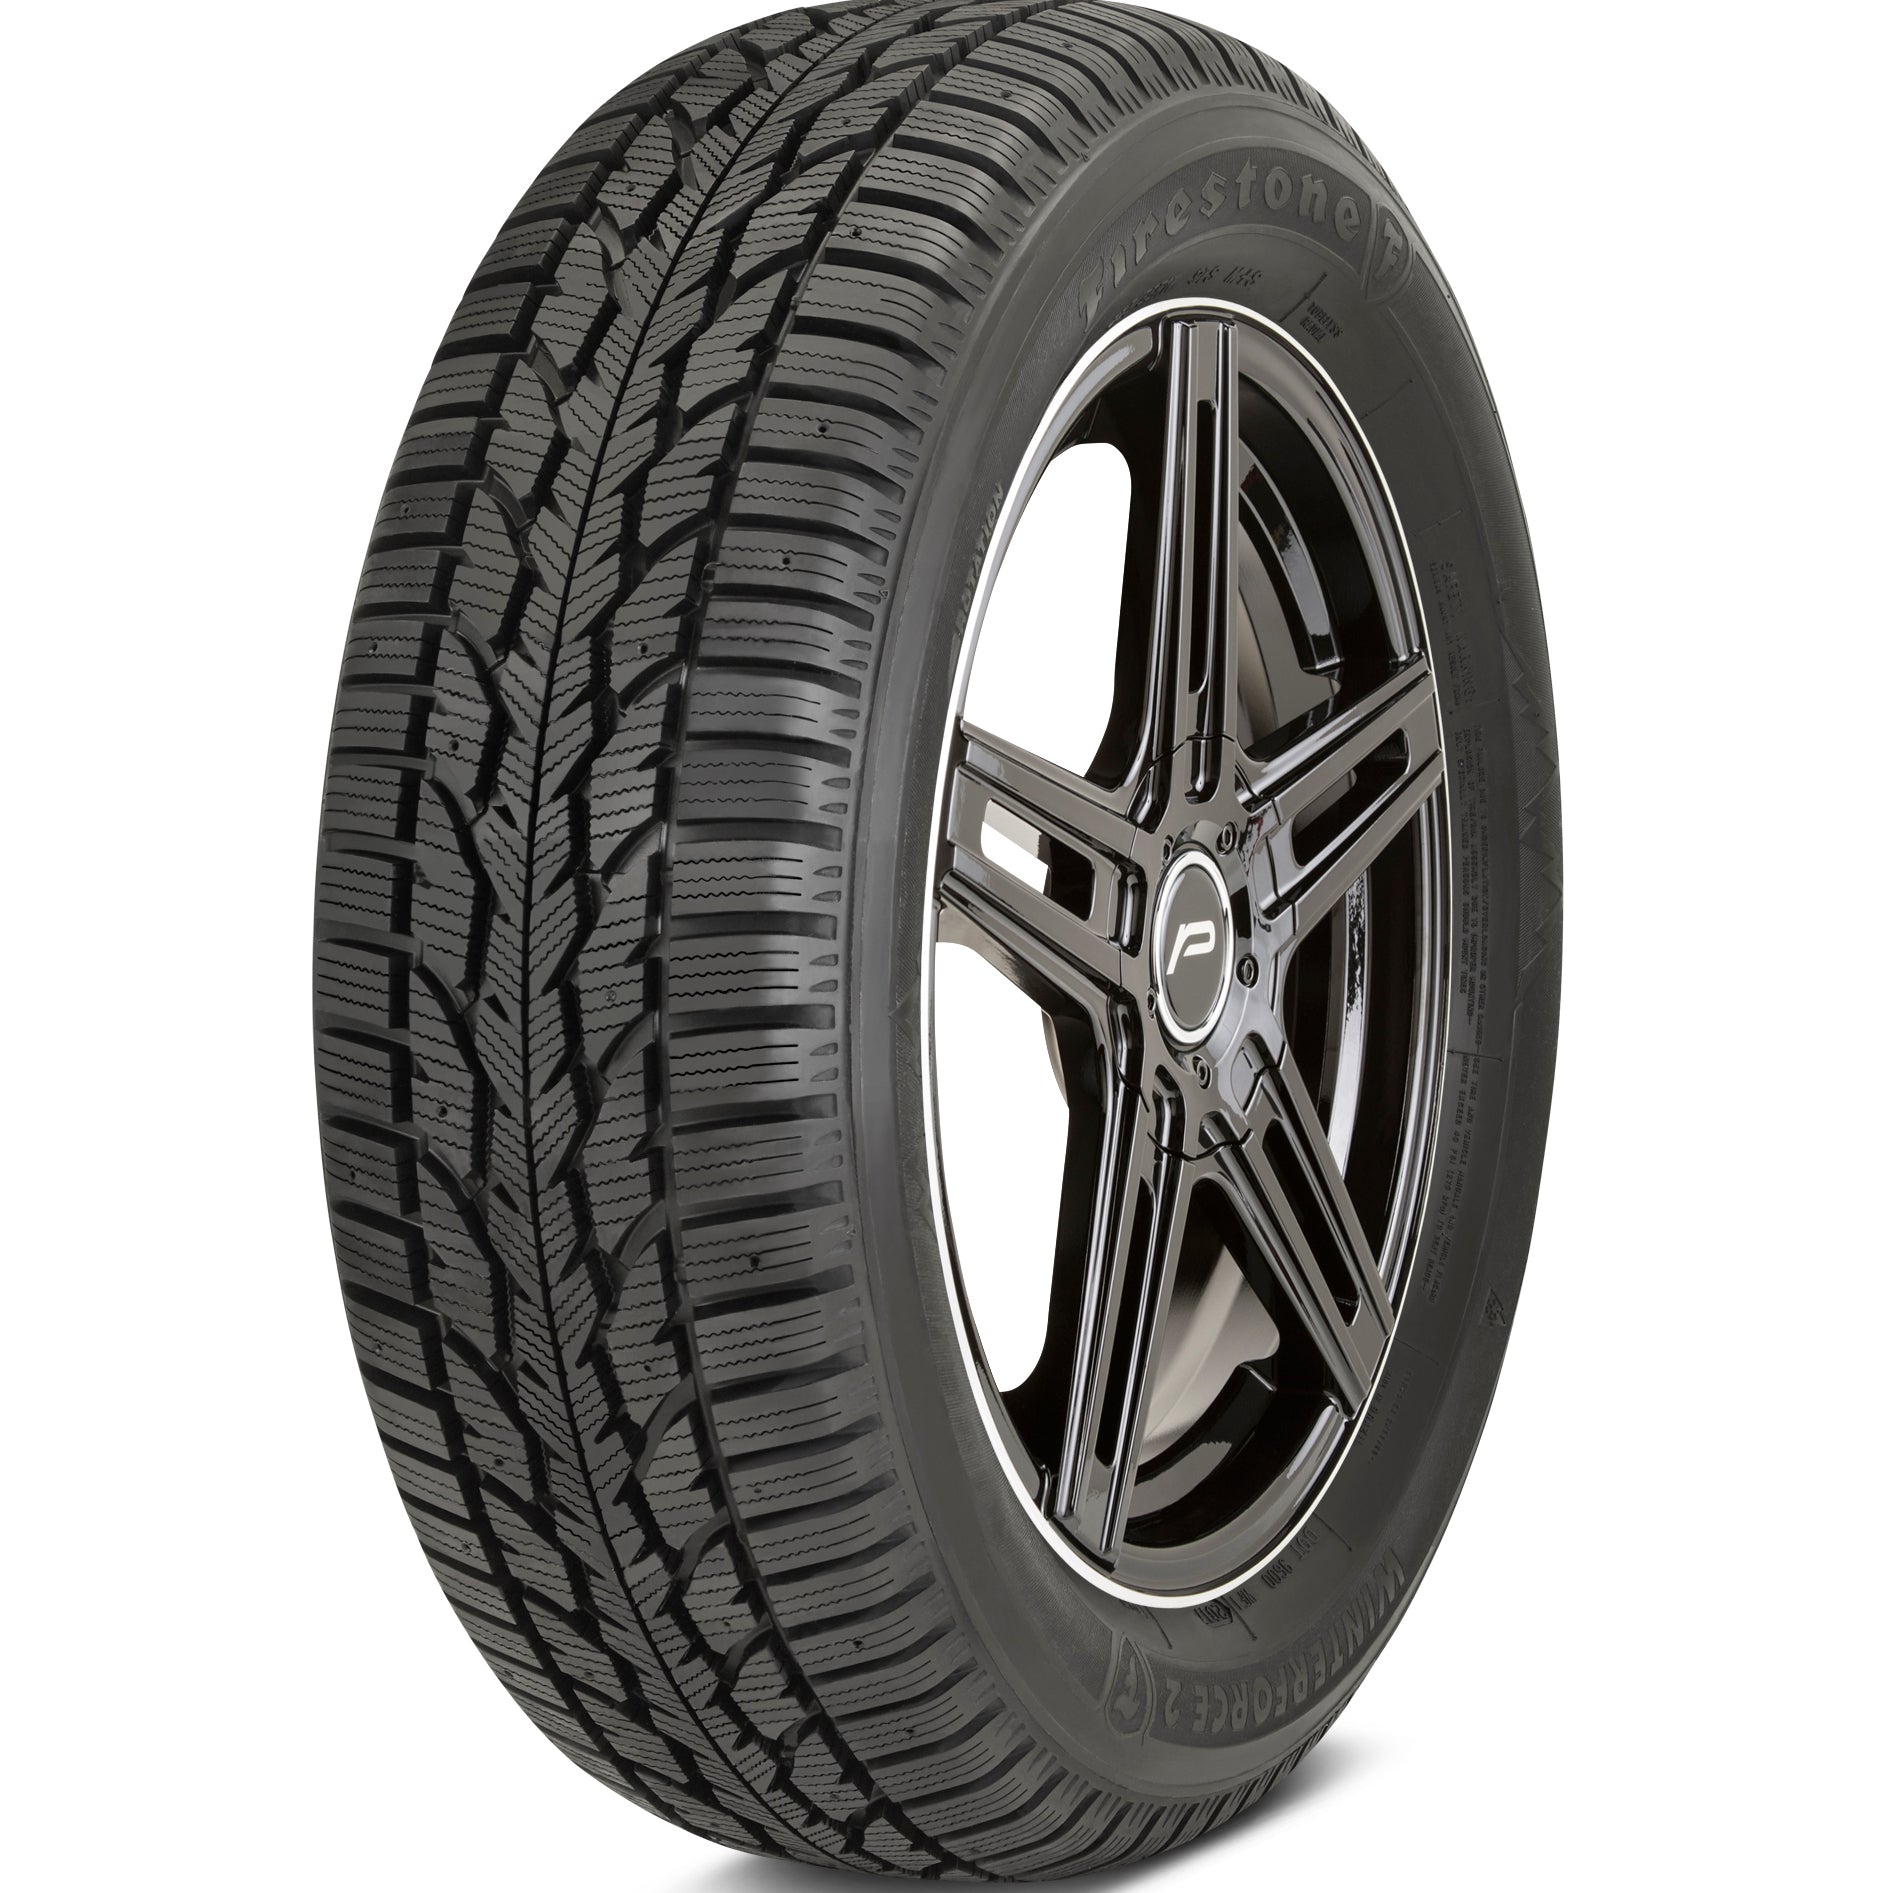 FIRESTONE WINTERFORCE2 215/65R17 (28X8.5R 17) Tires